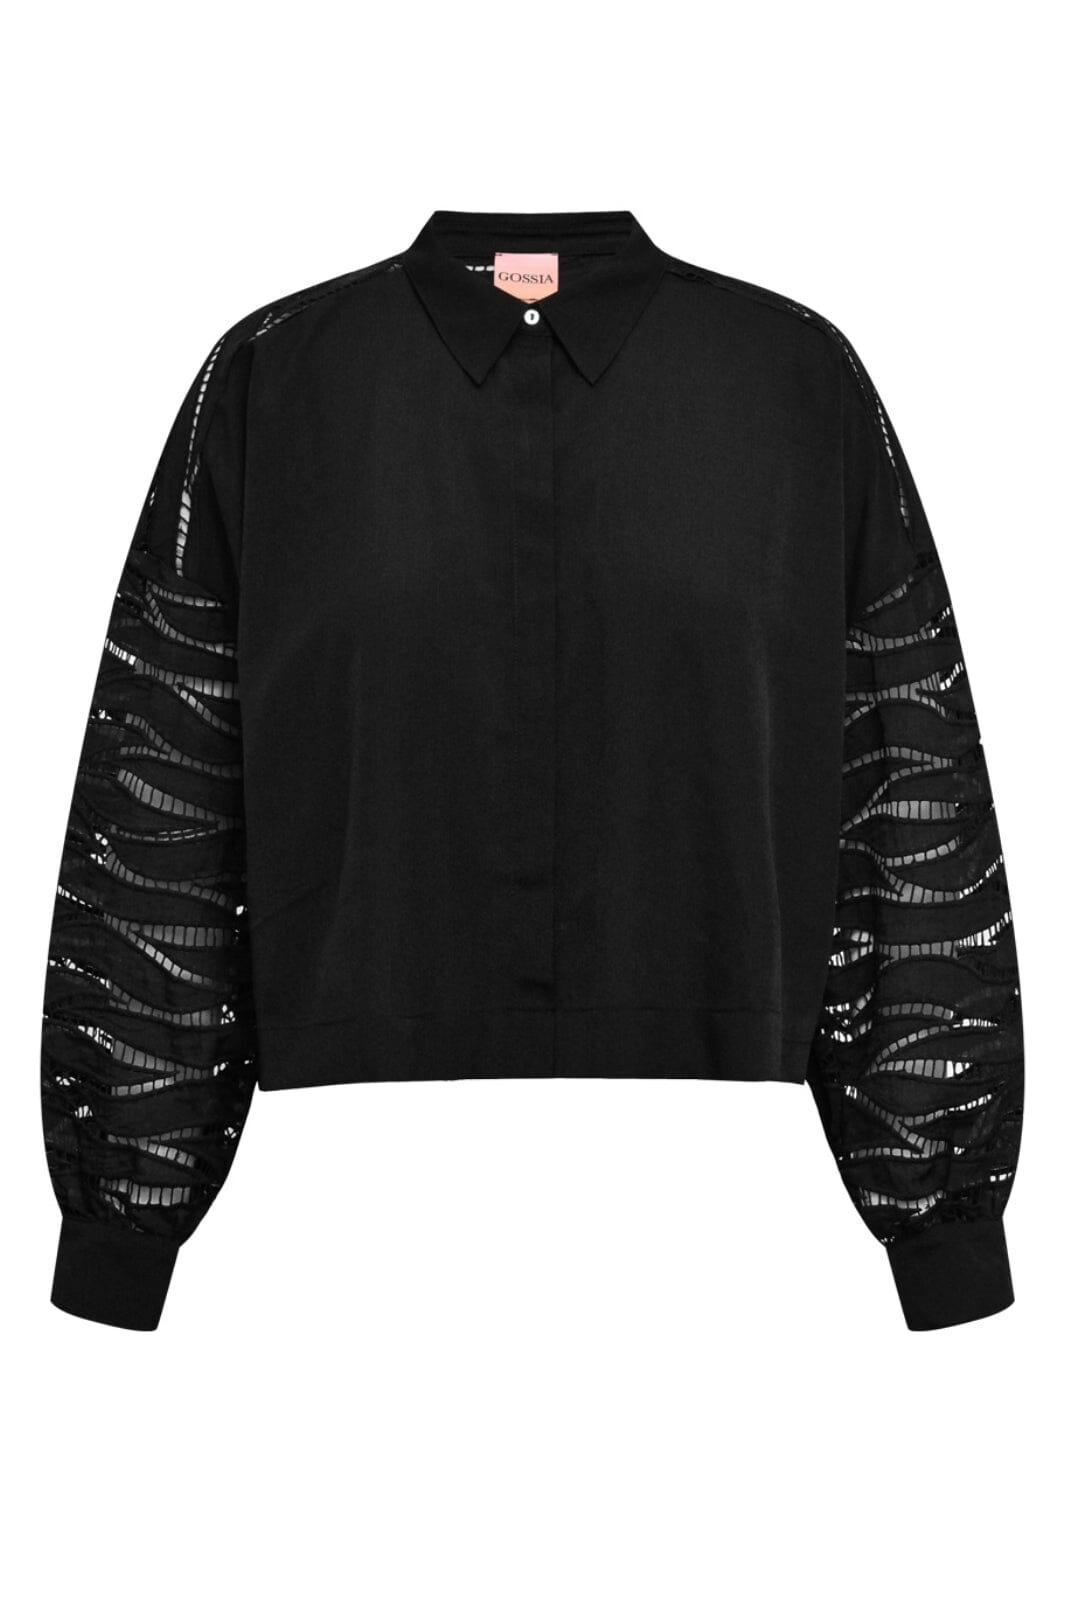 Gossia - FelineGO Shirt - Black Skjorter 